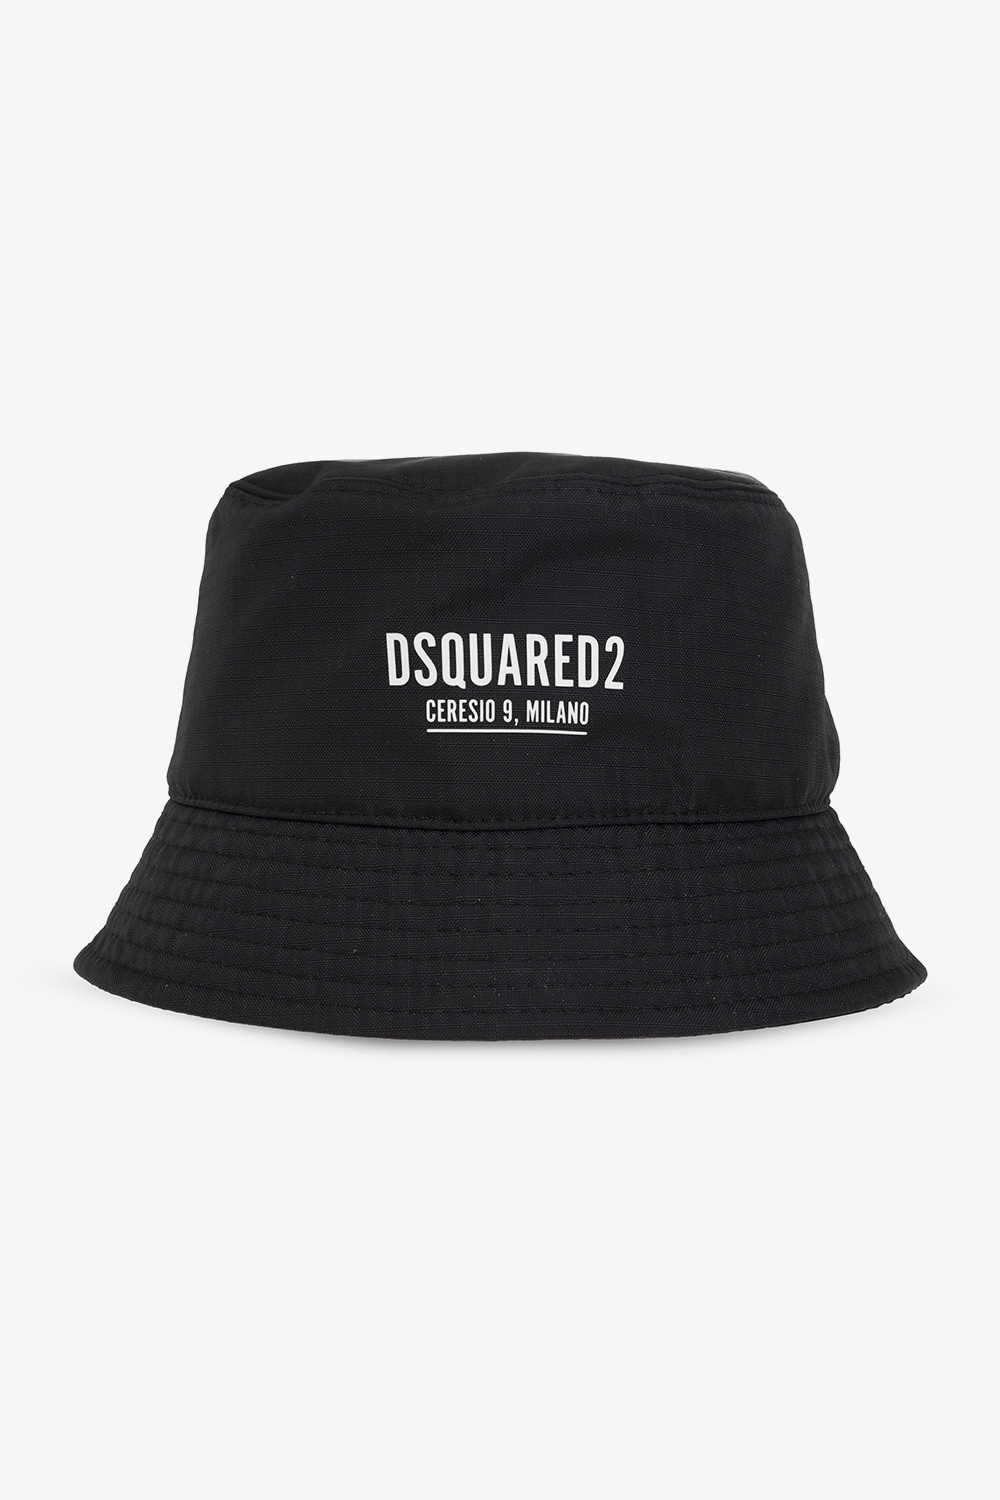 Dsquared2 logo baseball cap fila hat